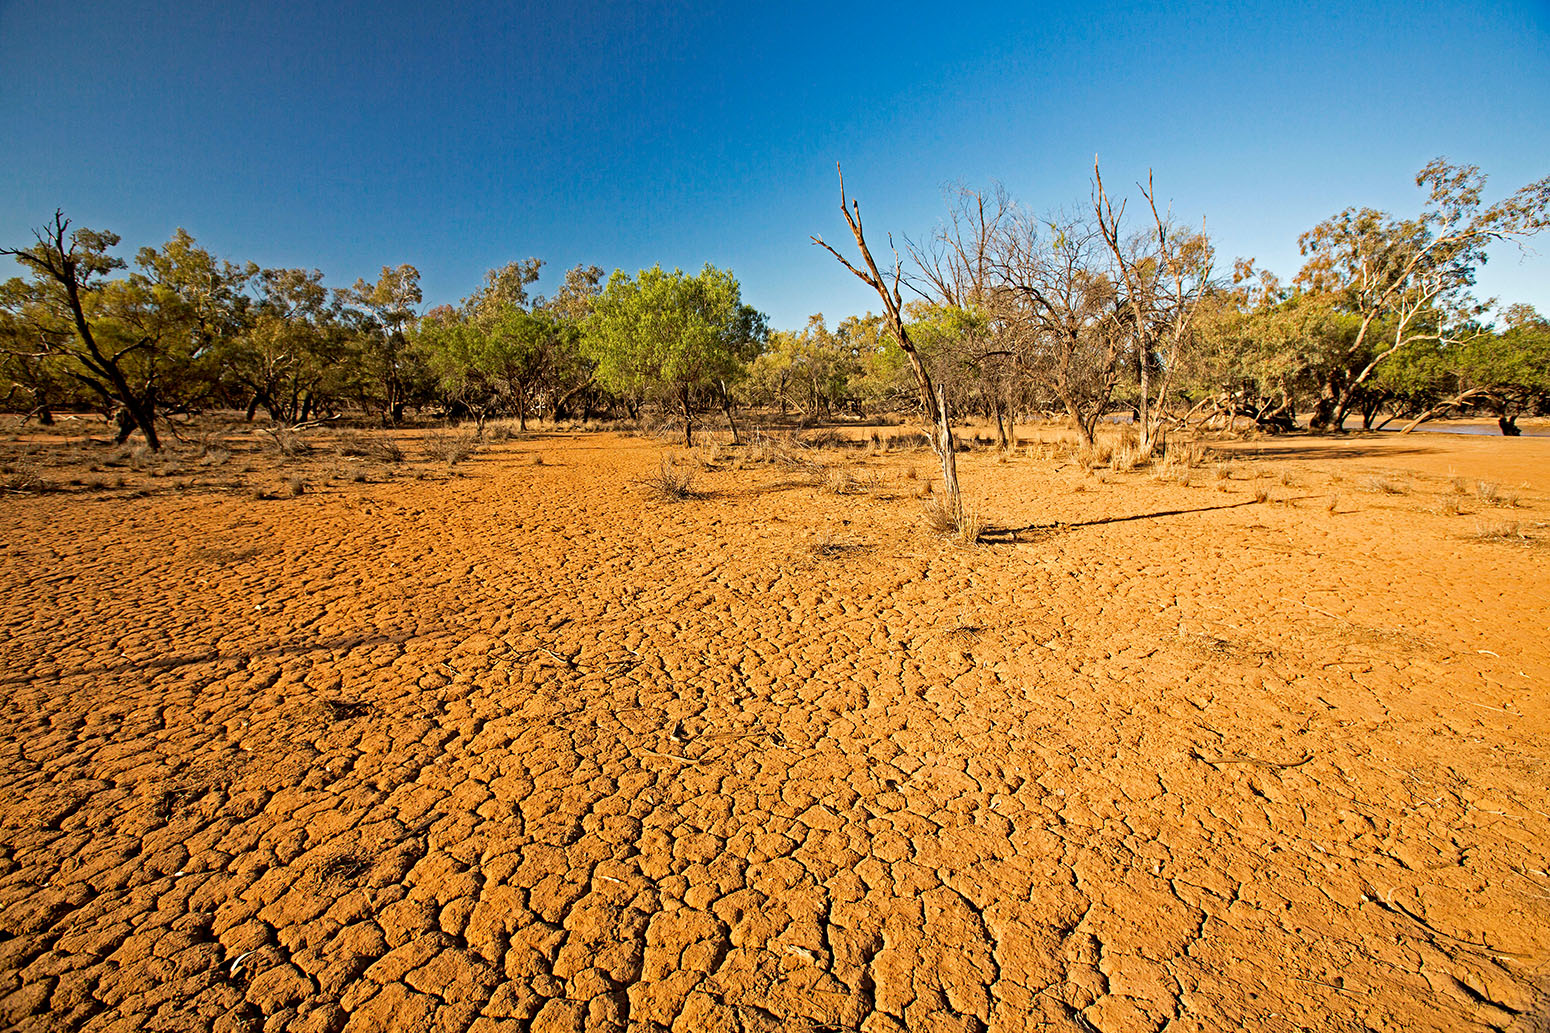 https://www.carbonbrief.org/wp-content/uploads/2019/08/drought-queensland-australia-F550K1.jpg